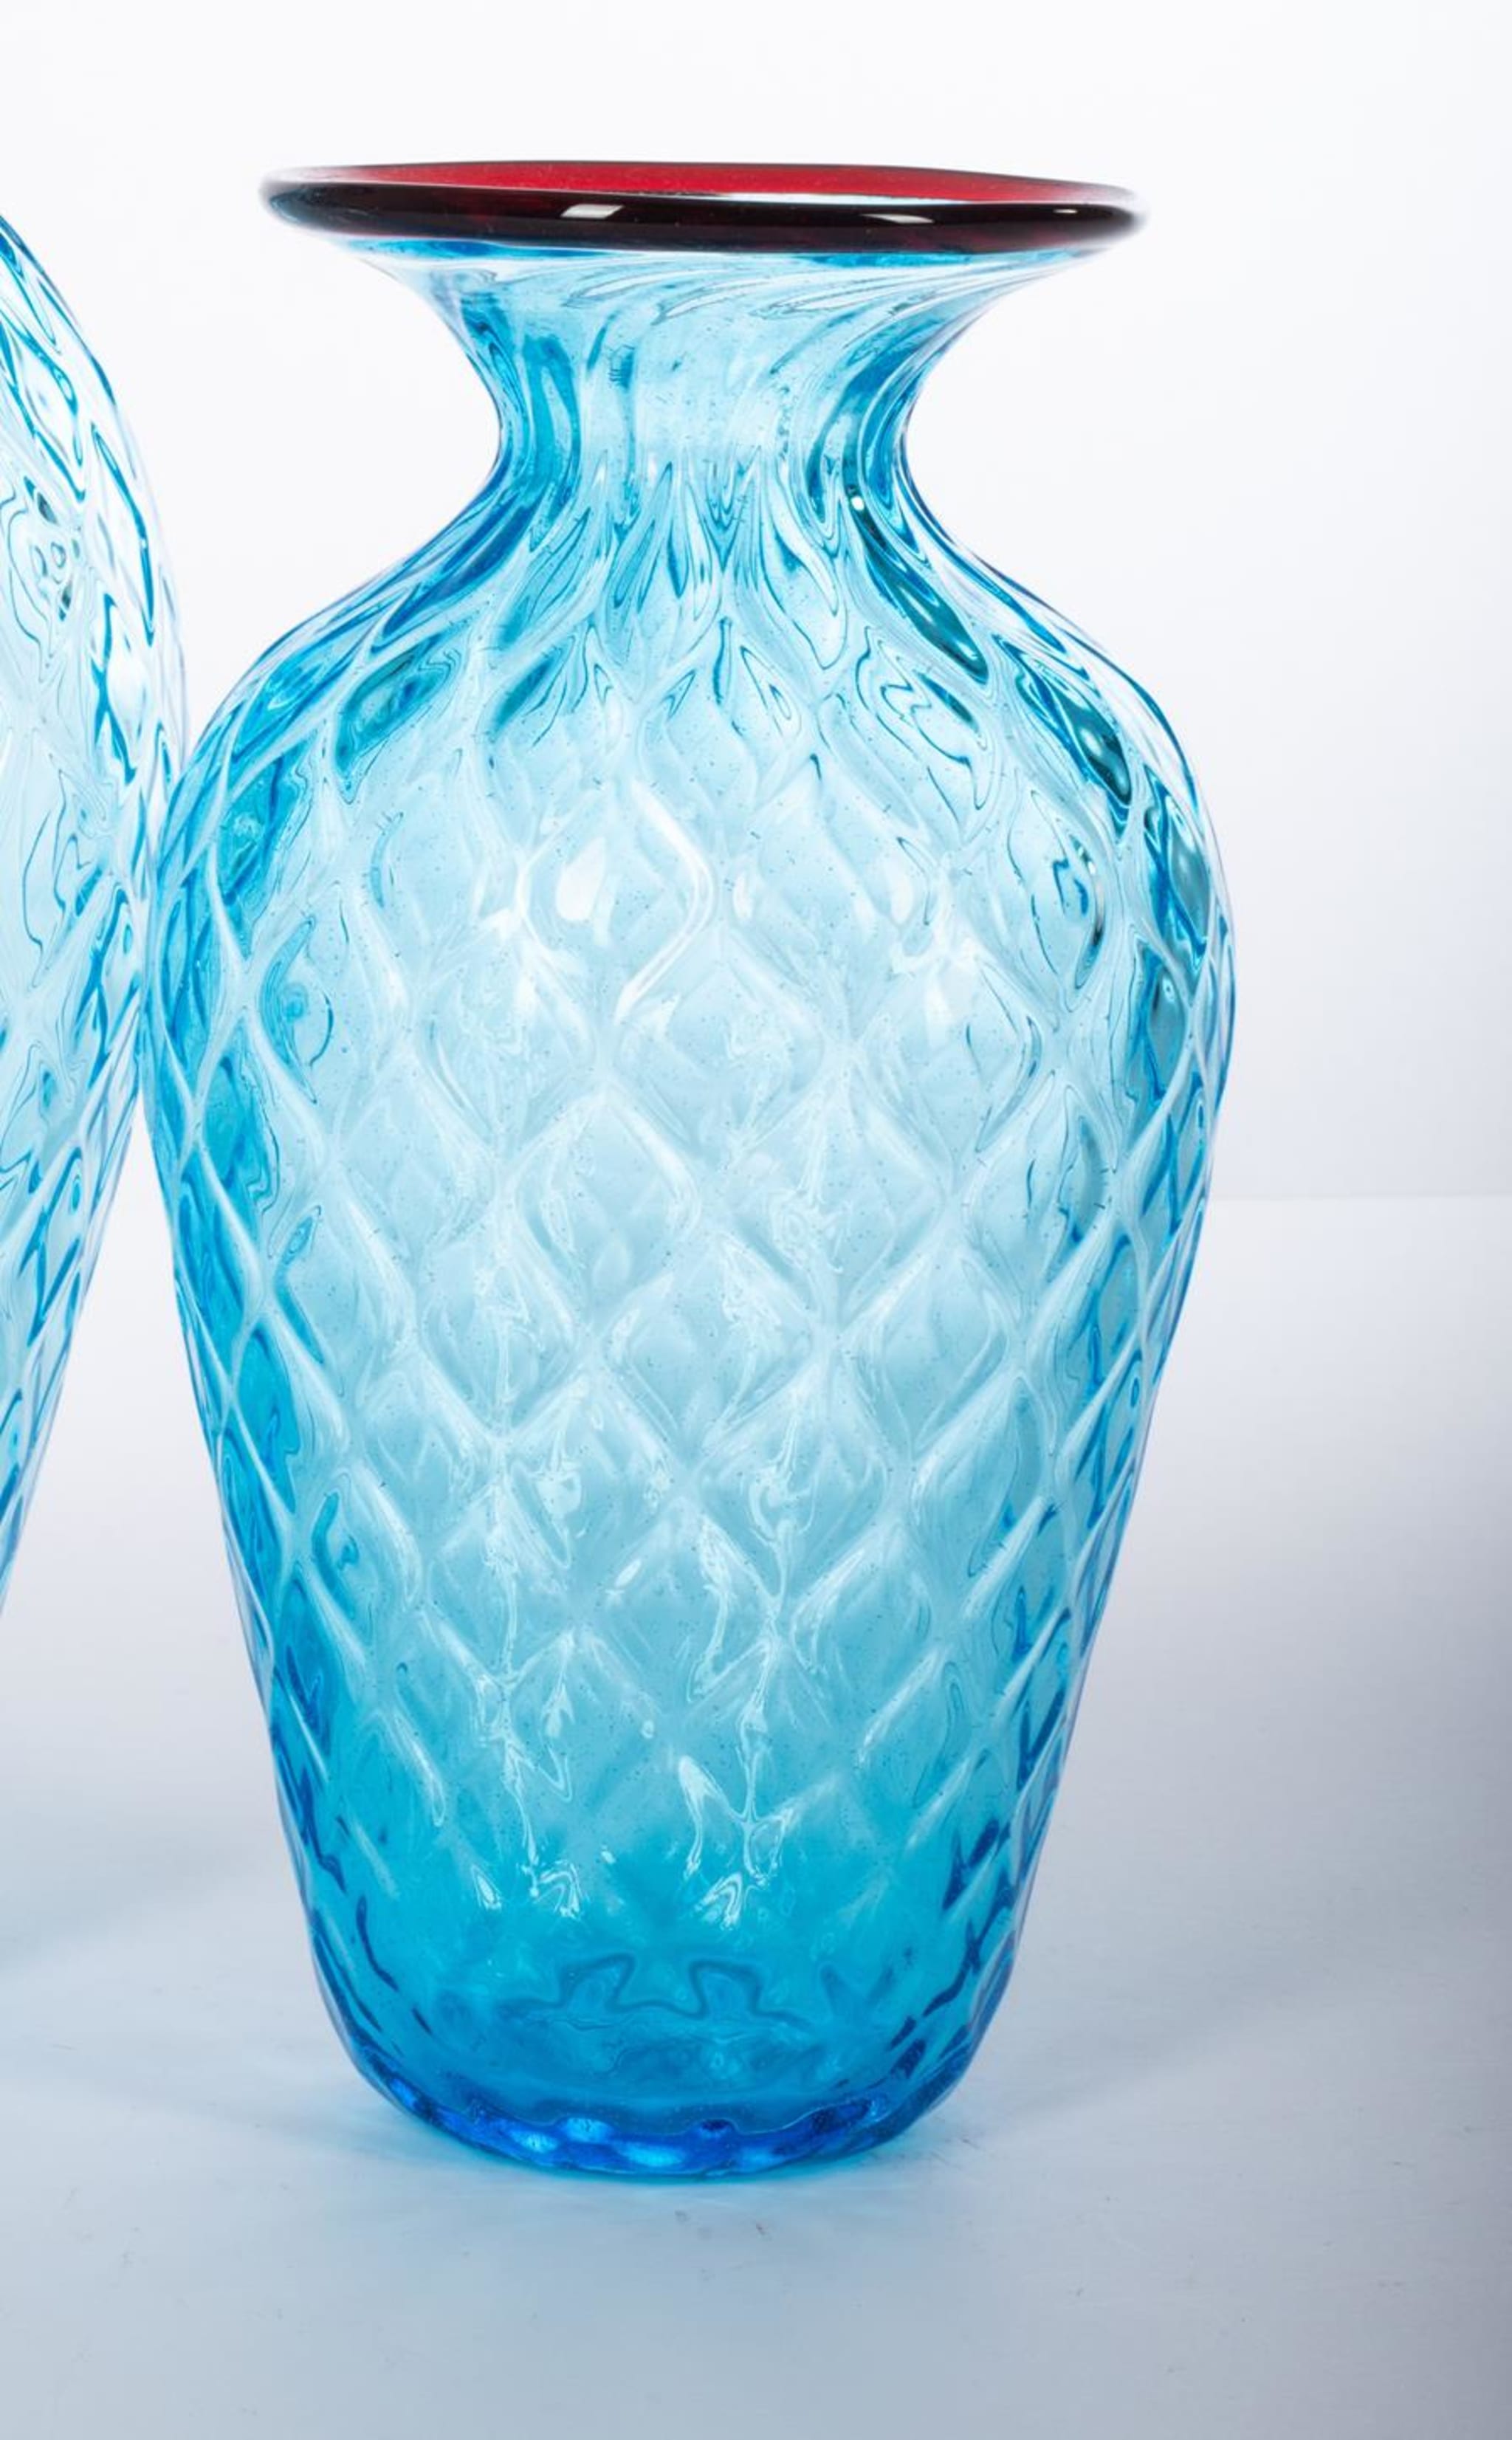 1950 Small Balloton Light-Blue Vase with Burgundy Rim - Alternative view 1